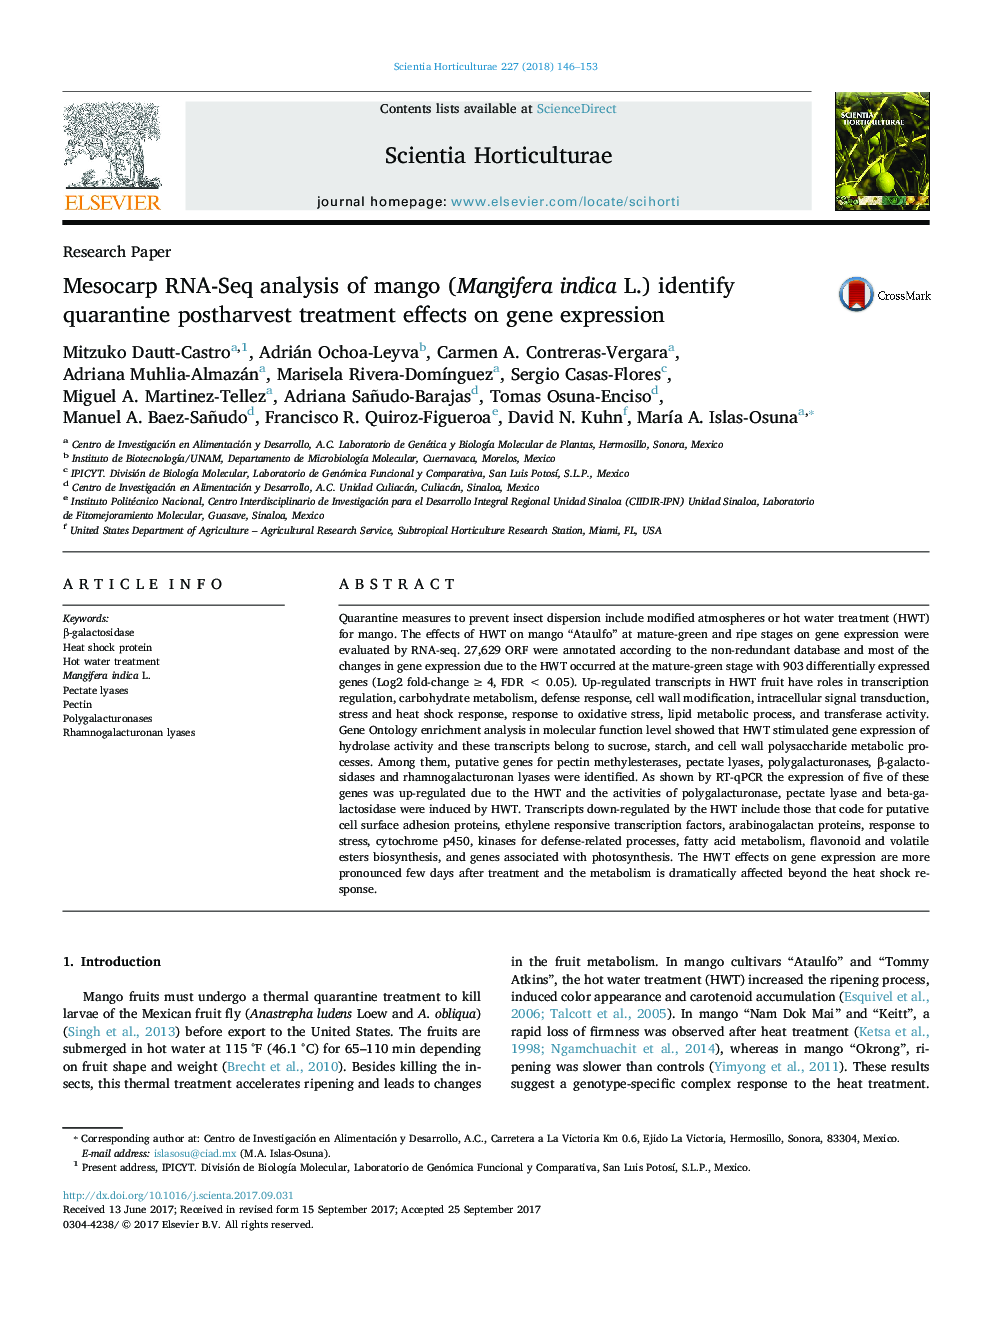 Research PaperMesocarp RNA-Seq analysis of mango (Mangifera indica L.) identify quarantine postharvest treatment effects on gene expression